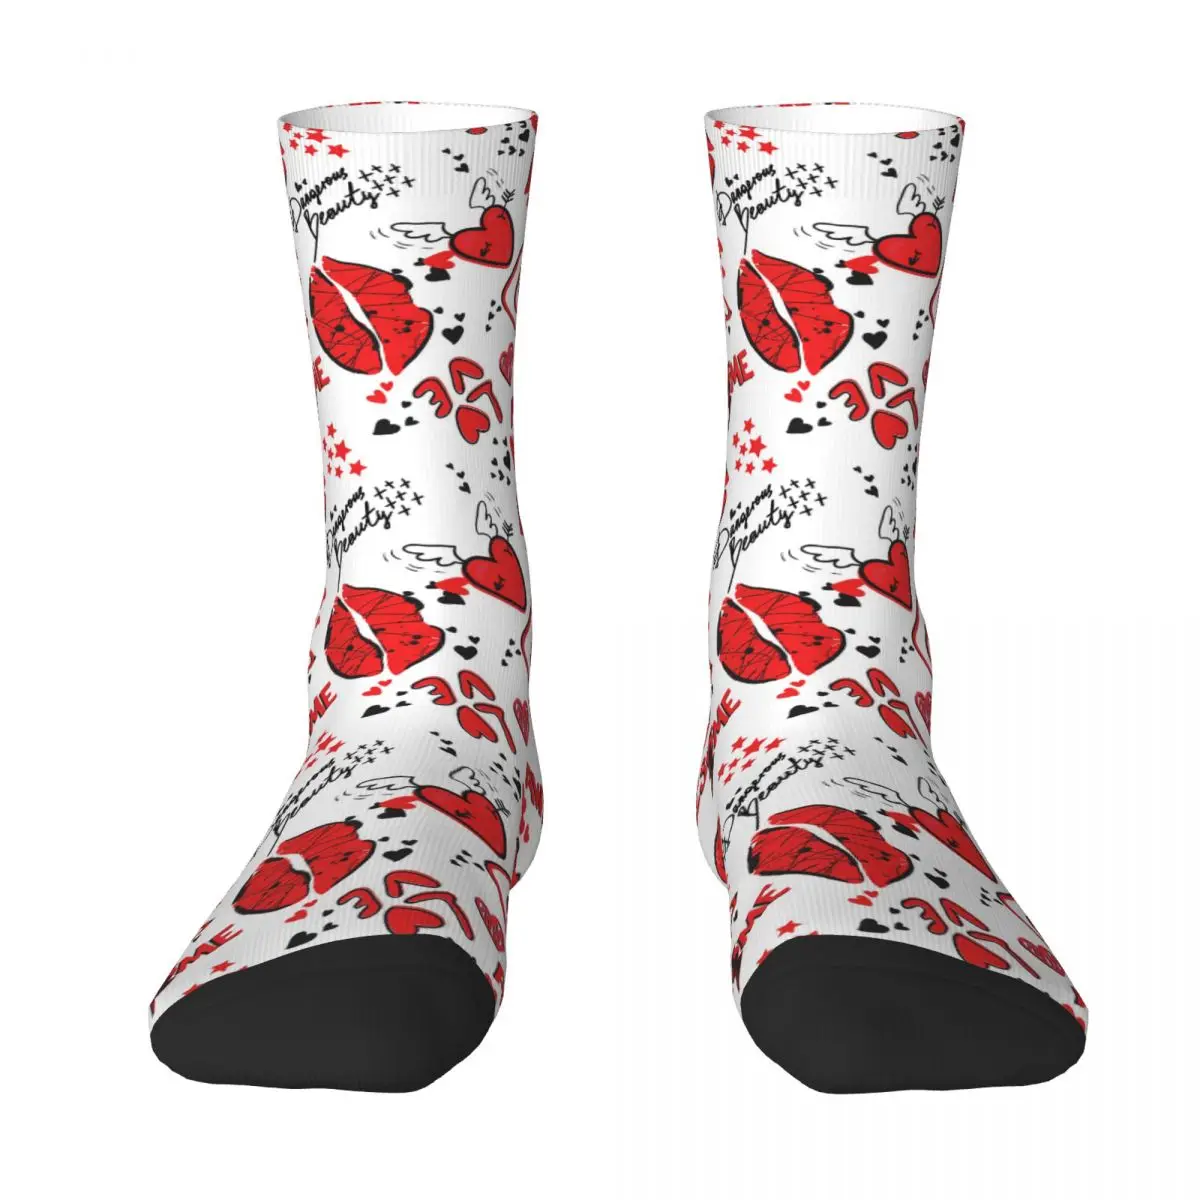 Seamless Pattern With Red Lips Xoxo And Hearts Adult Socks,Unisex socks,men Socks women Socks